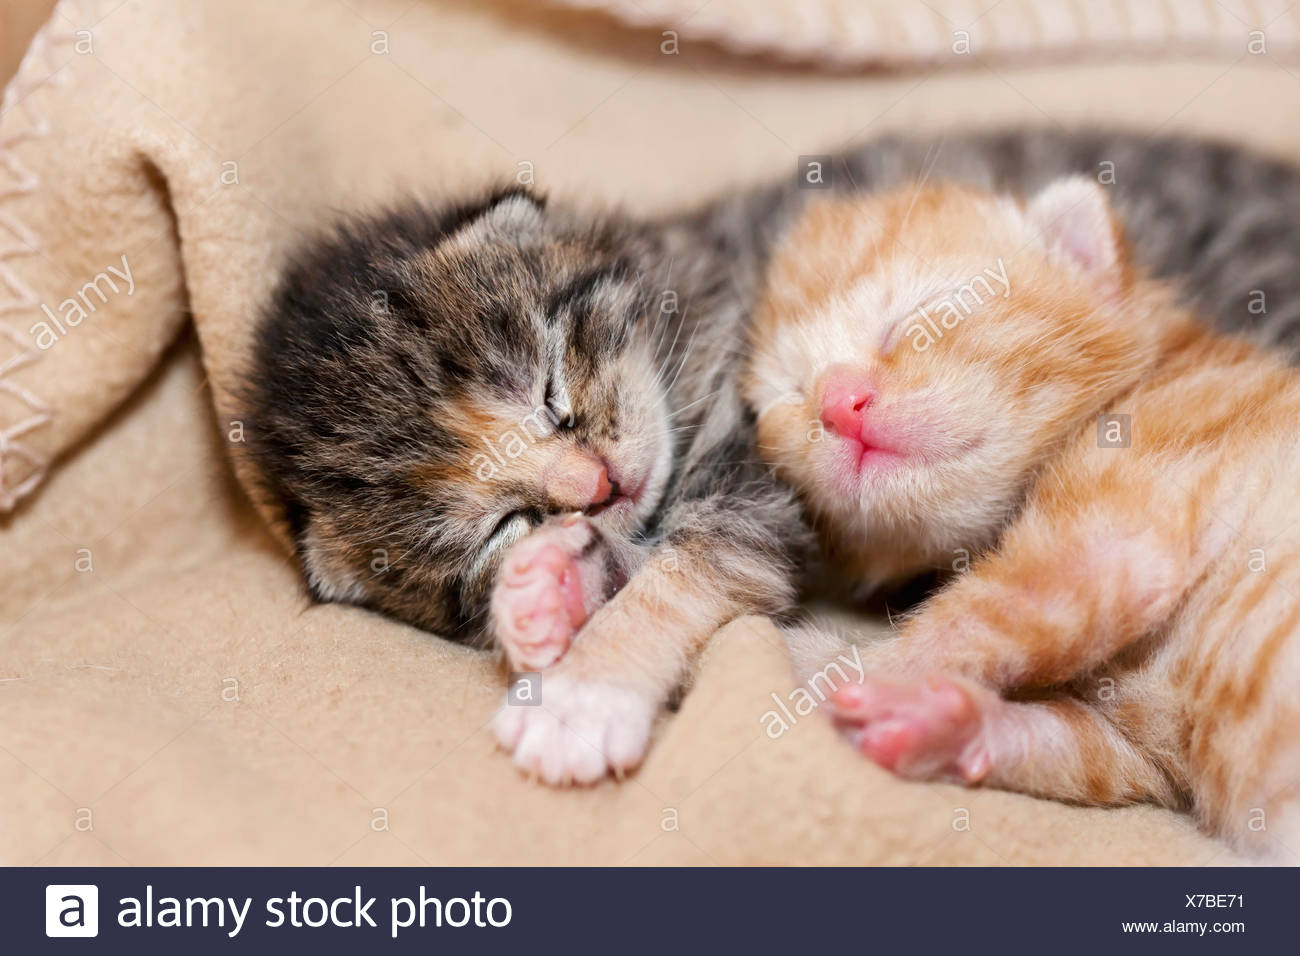 how much do baby kittens sleep